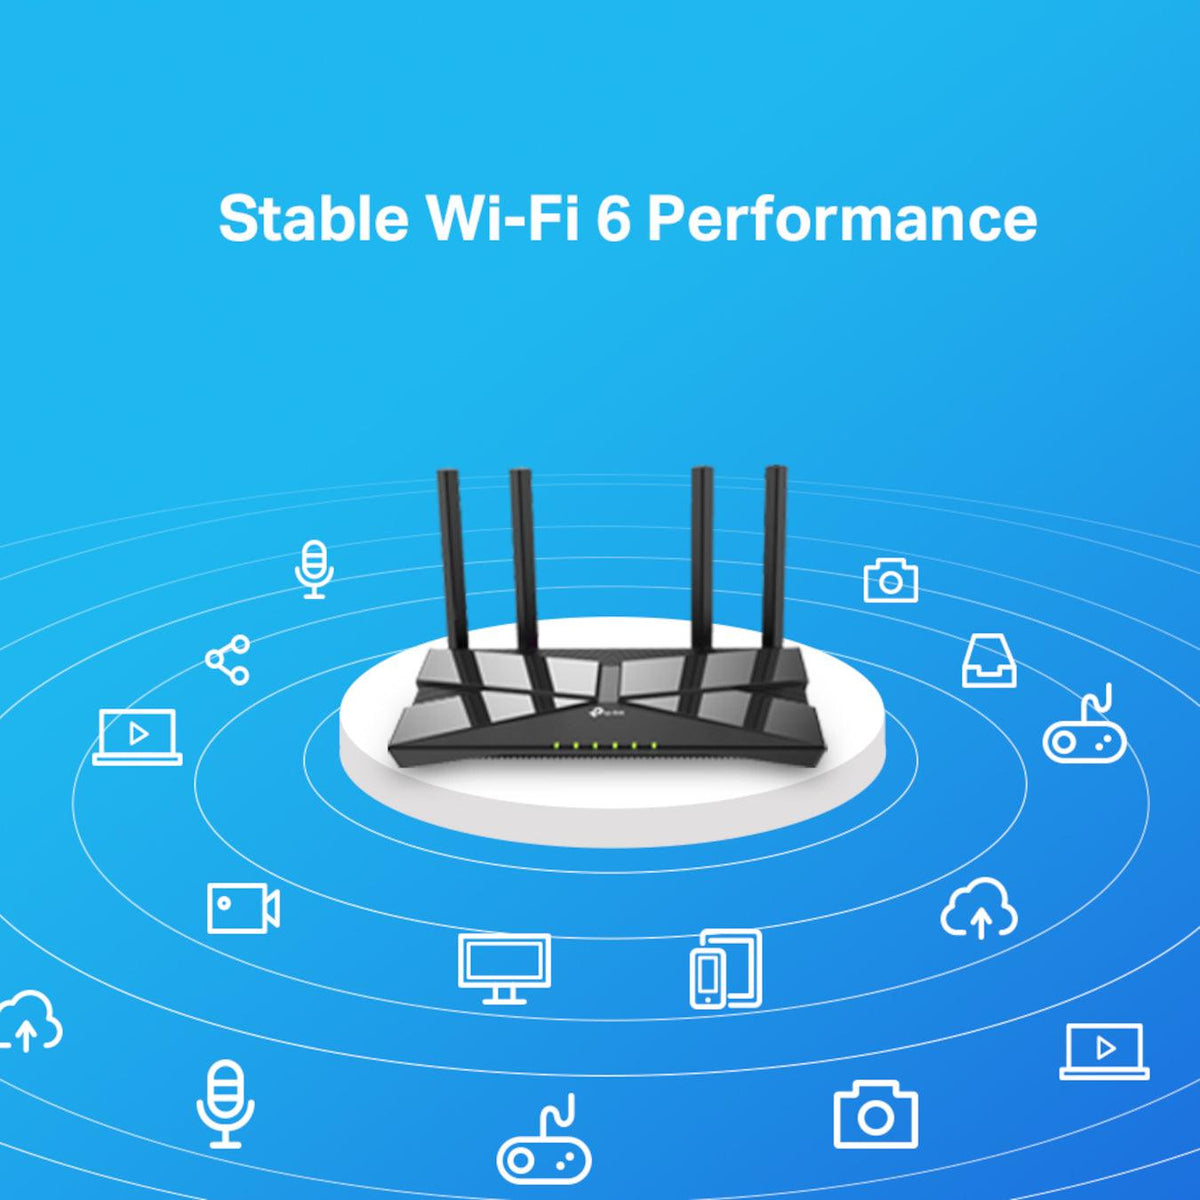 TP-Link AX1500 Wireless Dual-Band Gigabit Wi-Fi 6 Router | ARCHER AX10 (7245578240188)